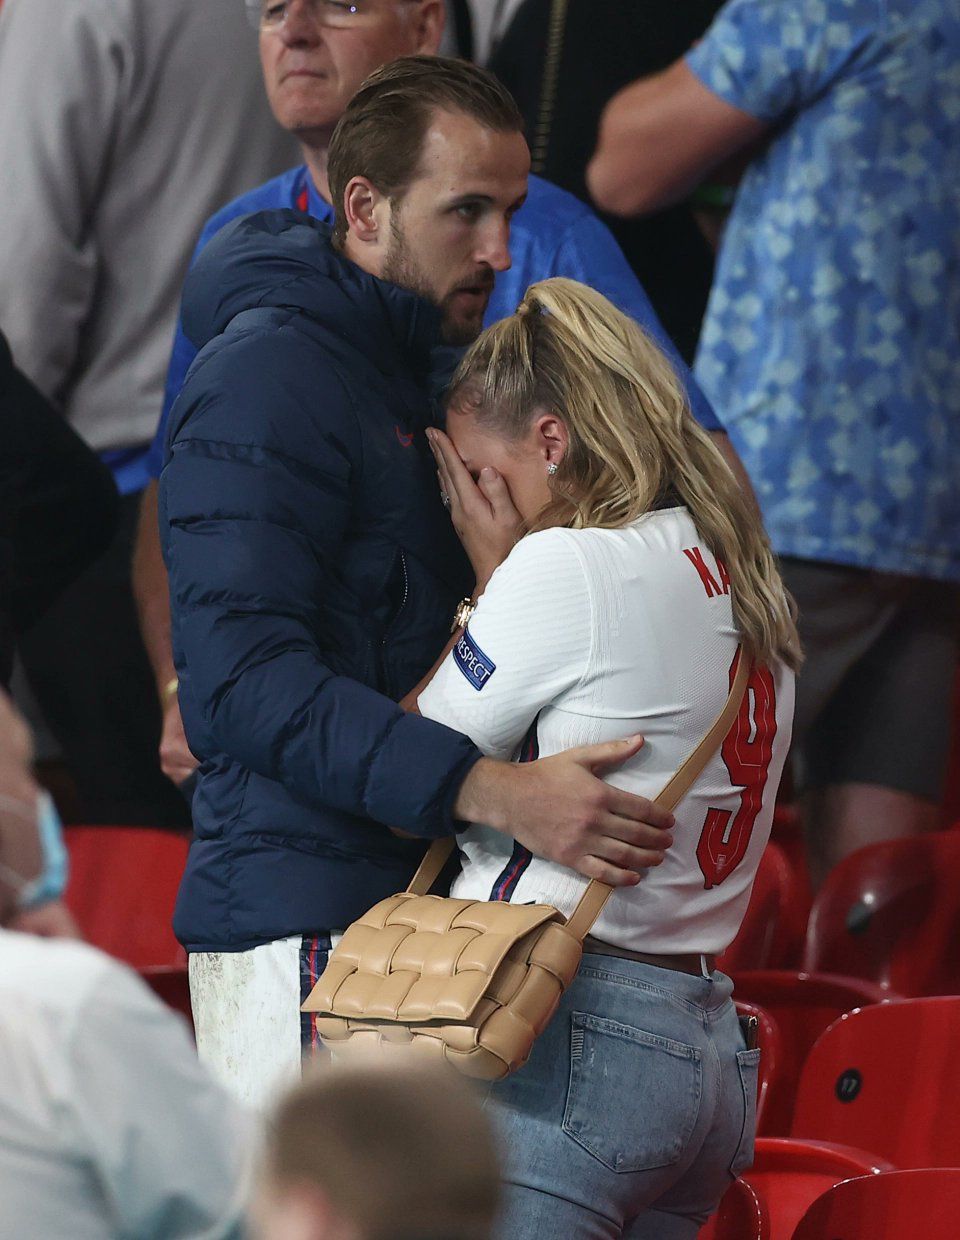 Imagini emotionante pe Wembley dupa finala Euro 2020! Harry Kane a urcat in tribune pentru a-si consola sotia_5